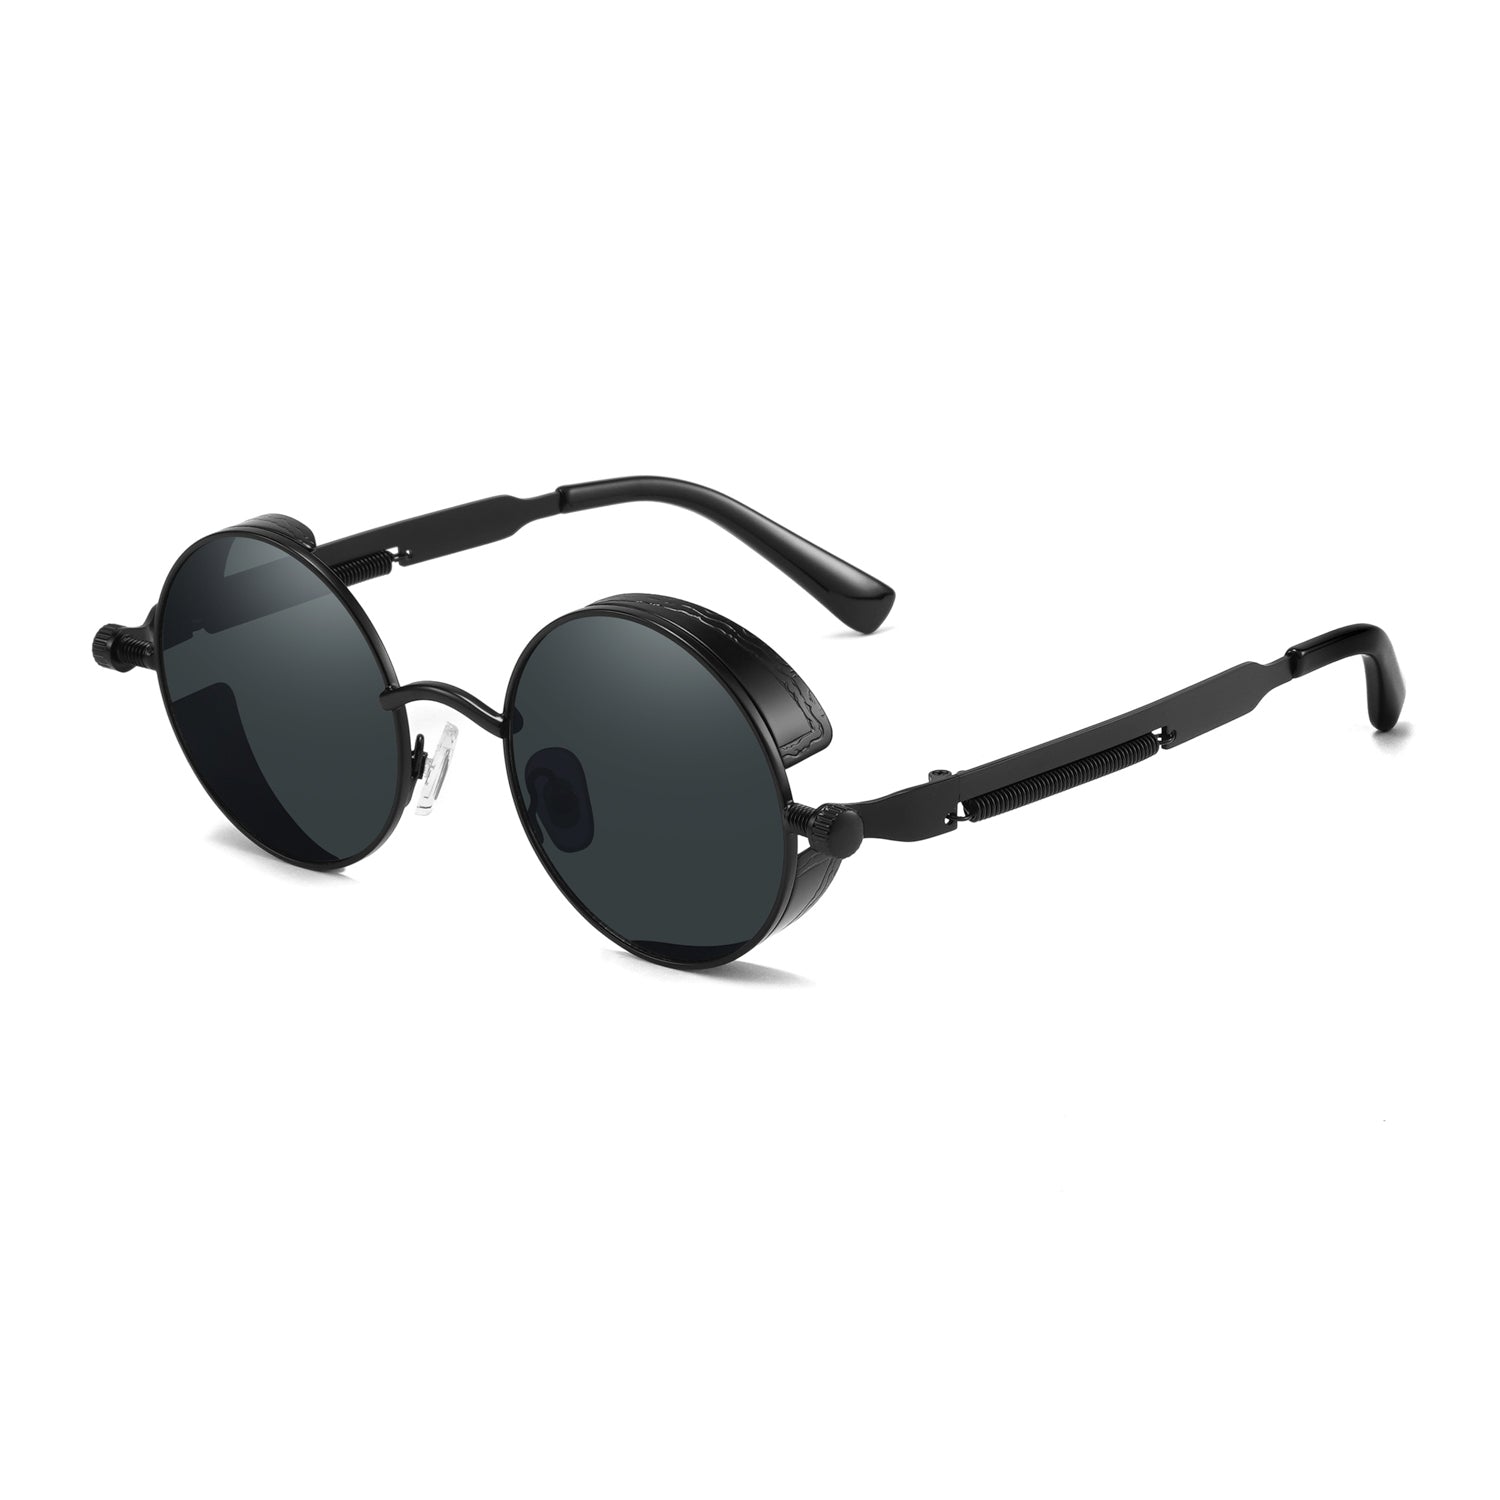 Jacob Steampunk Sunglasses